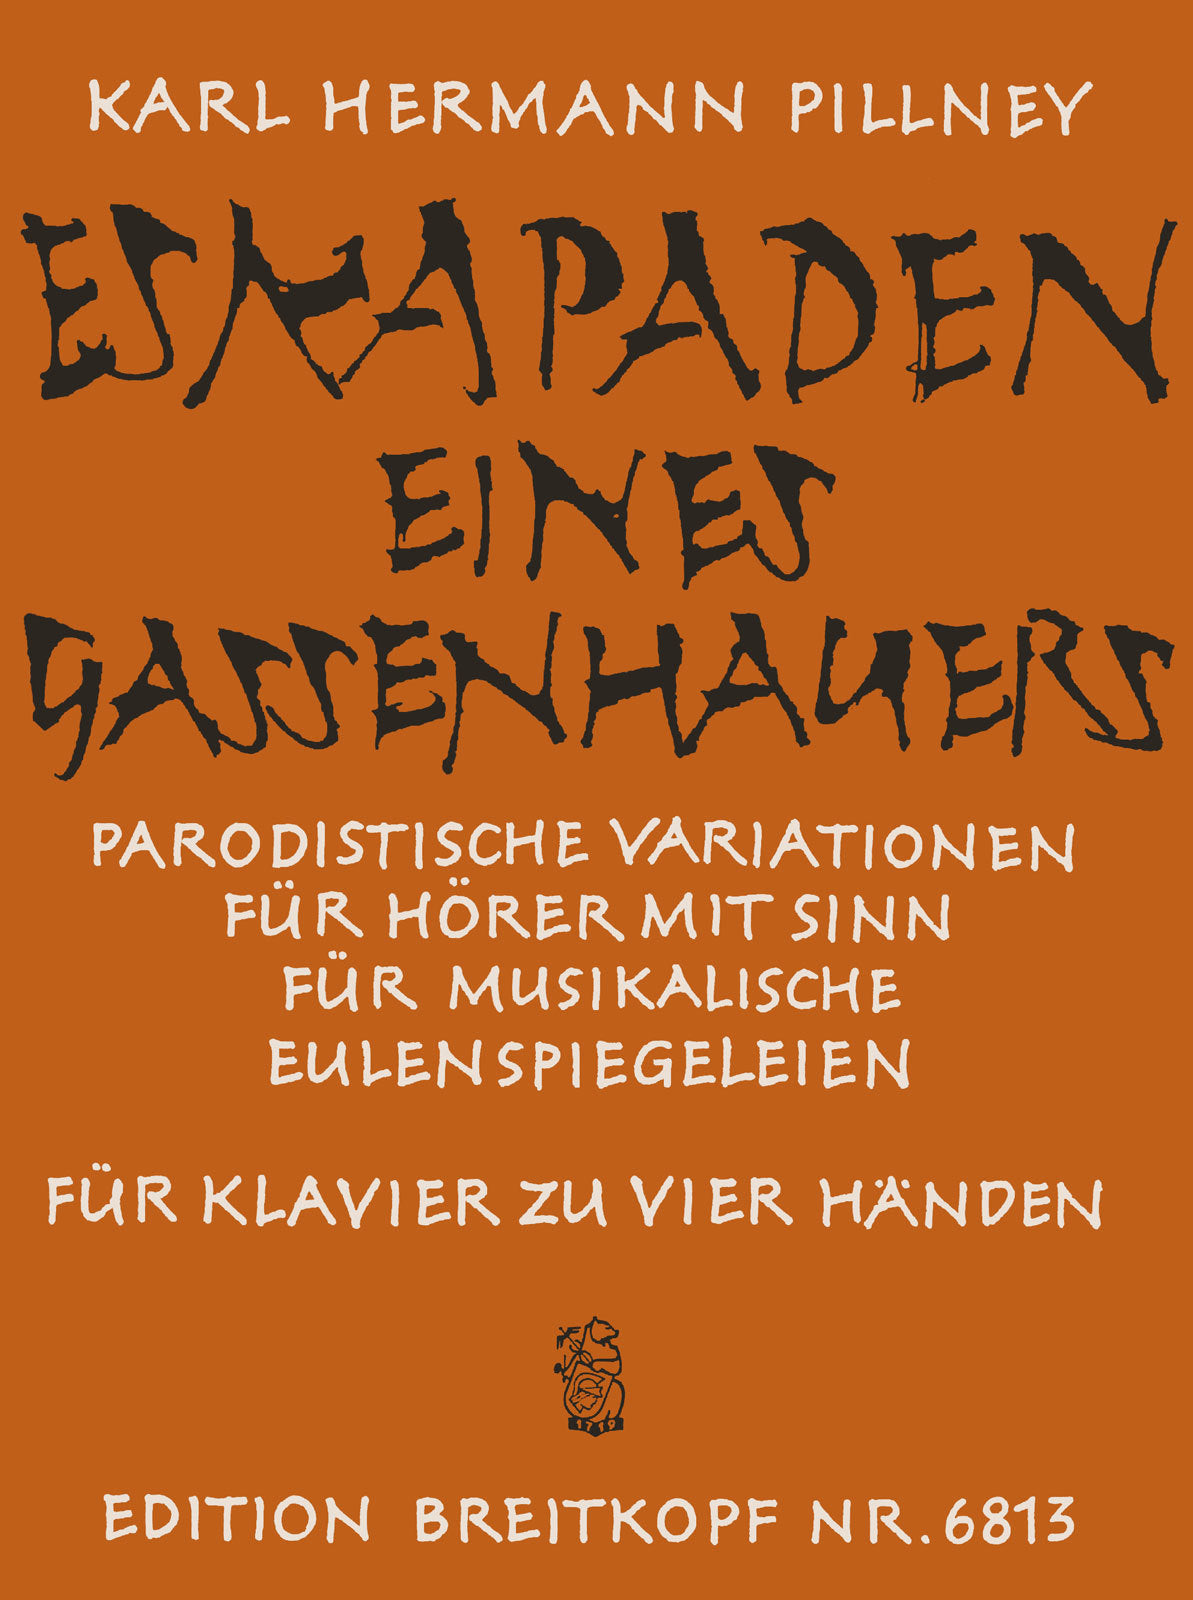 Pillney: Eskapaden eines Gassenhauers (version for piano 4-hands)